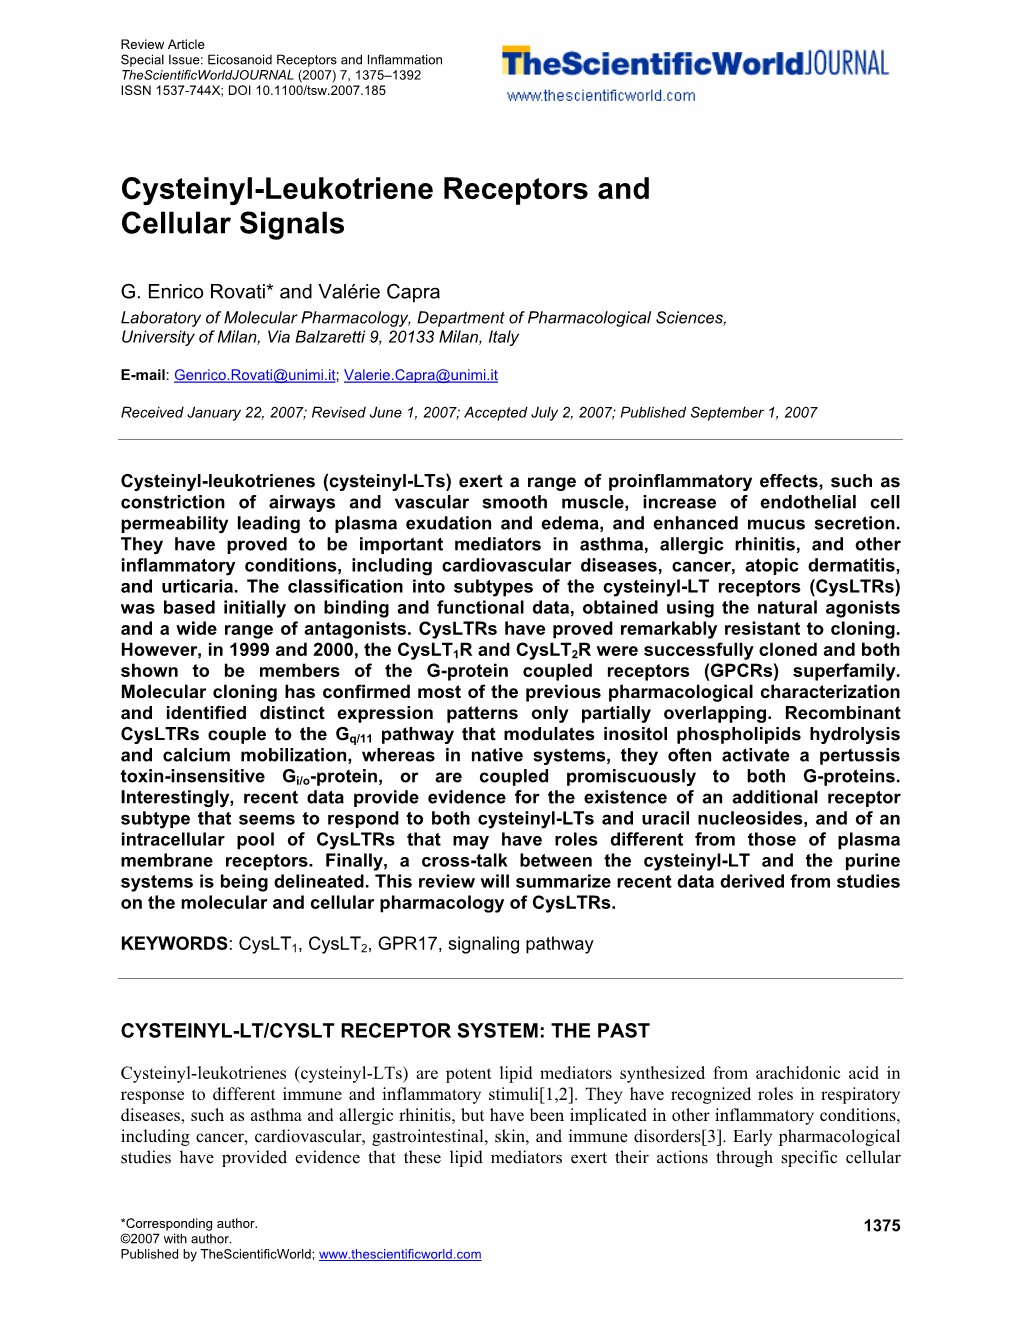 Cysteinyl-Leukotriene Receptors and Cellular Signals